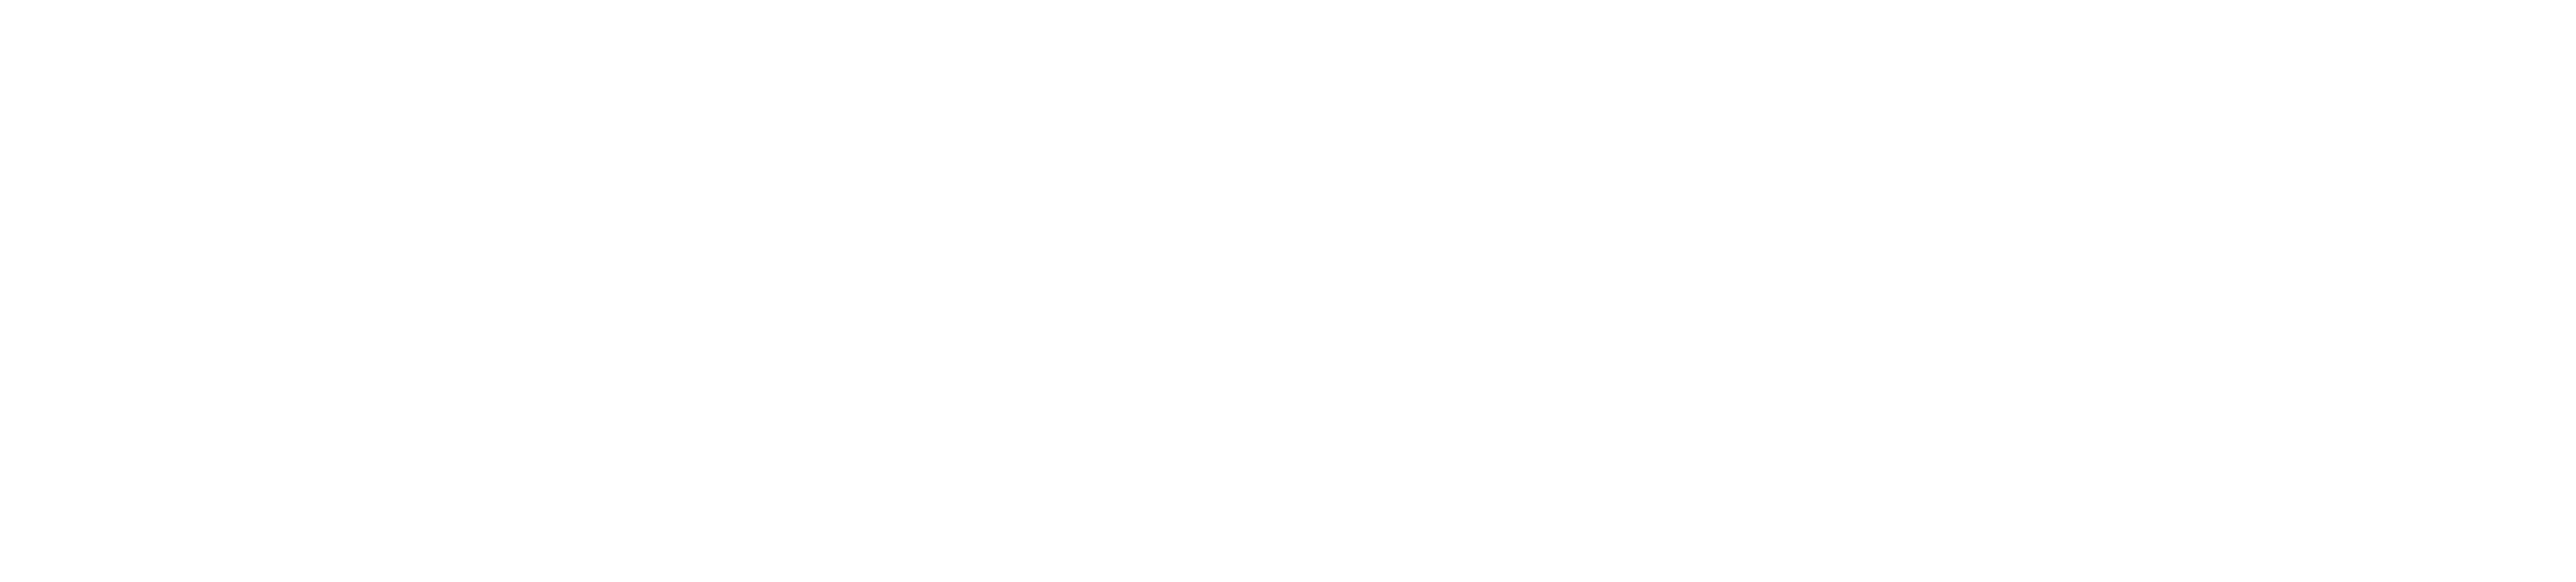 logo-ashcroft-white-high